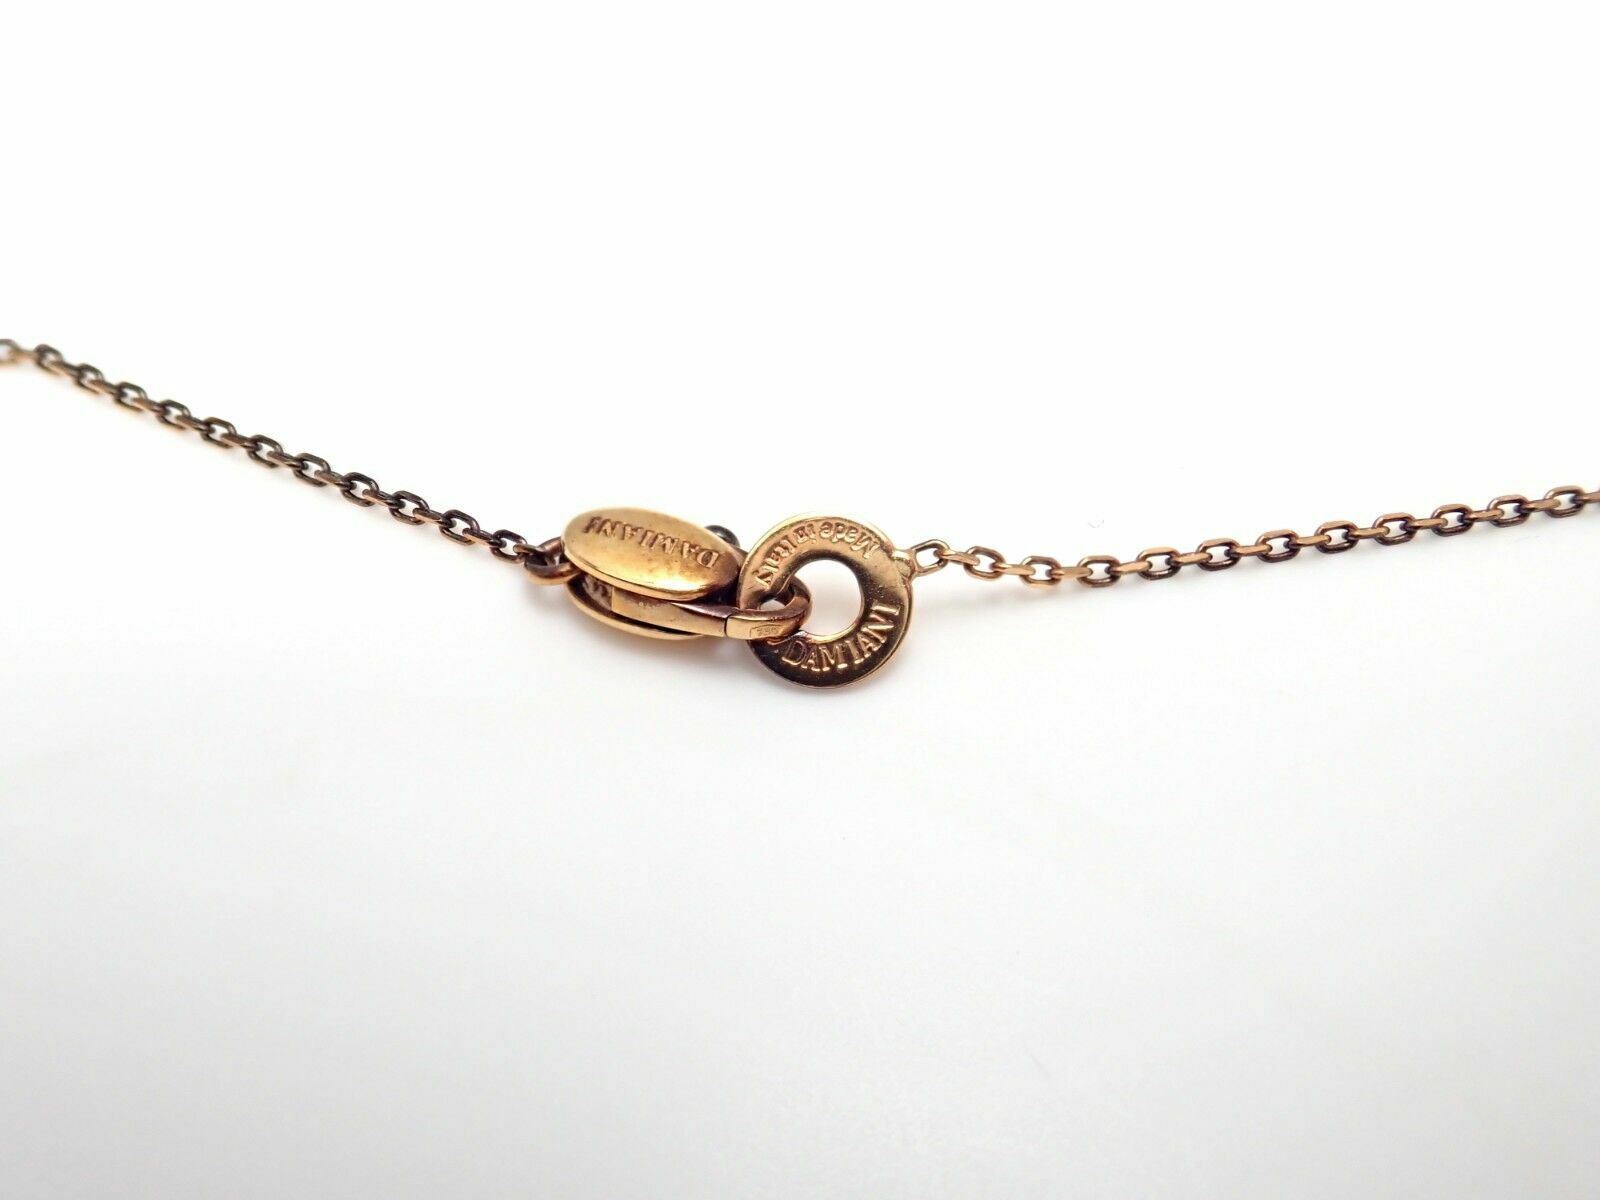 Damiani Jewelry & Watches:Vintage & Antique Jewelry:Necklaces & Pendants Authentic Damiani 18k Rose Gold Maji Sharon Stone Rough Diamond Pendant Necklace